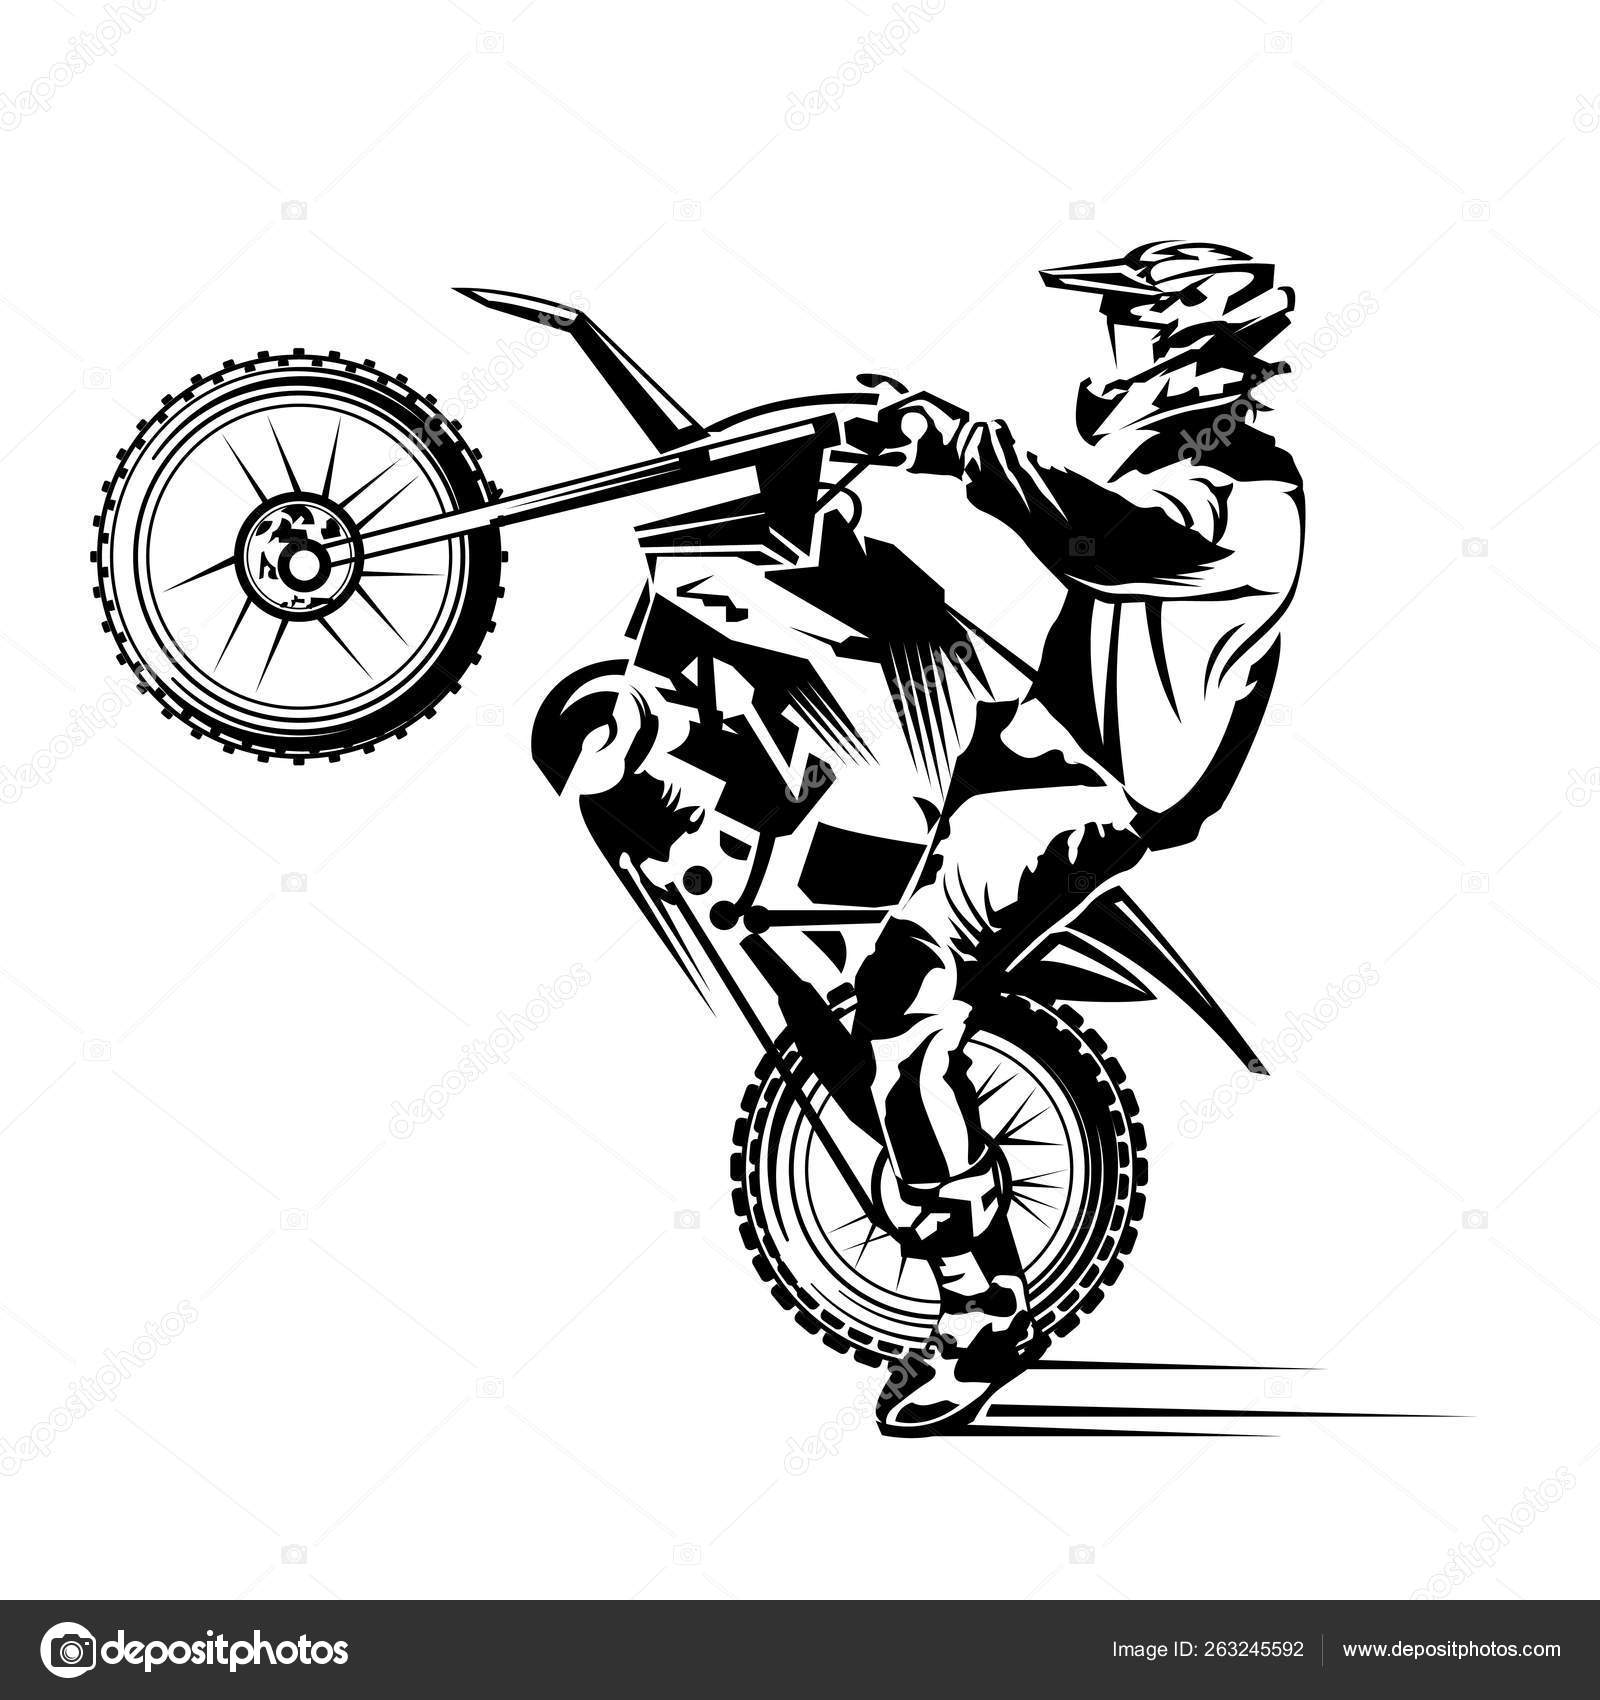 Motocross Rider Executando Um Salto Alto. Estilo Dos Desenhos Animados.  Ilustração Vetorial Conceitual Sobre O Esporte Do Motocross. Ilustraciones  svg, vectoriales, clip art vectorizado libre de derechos. Image 77835190